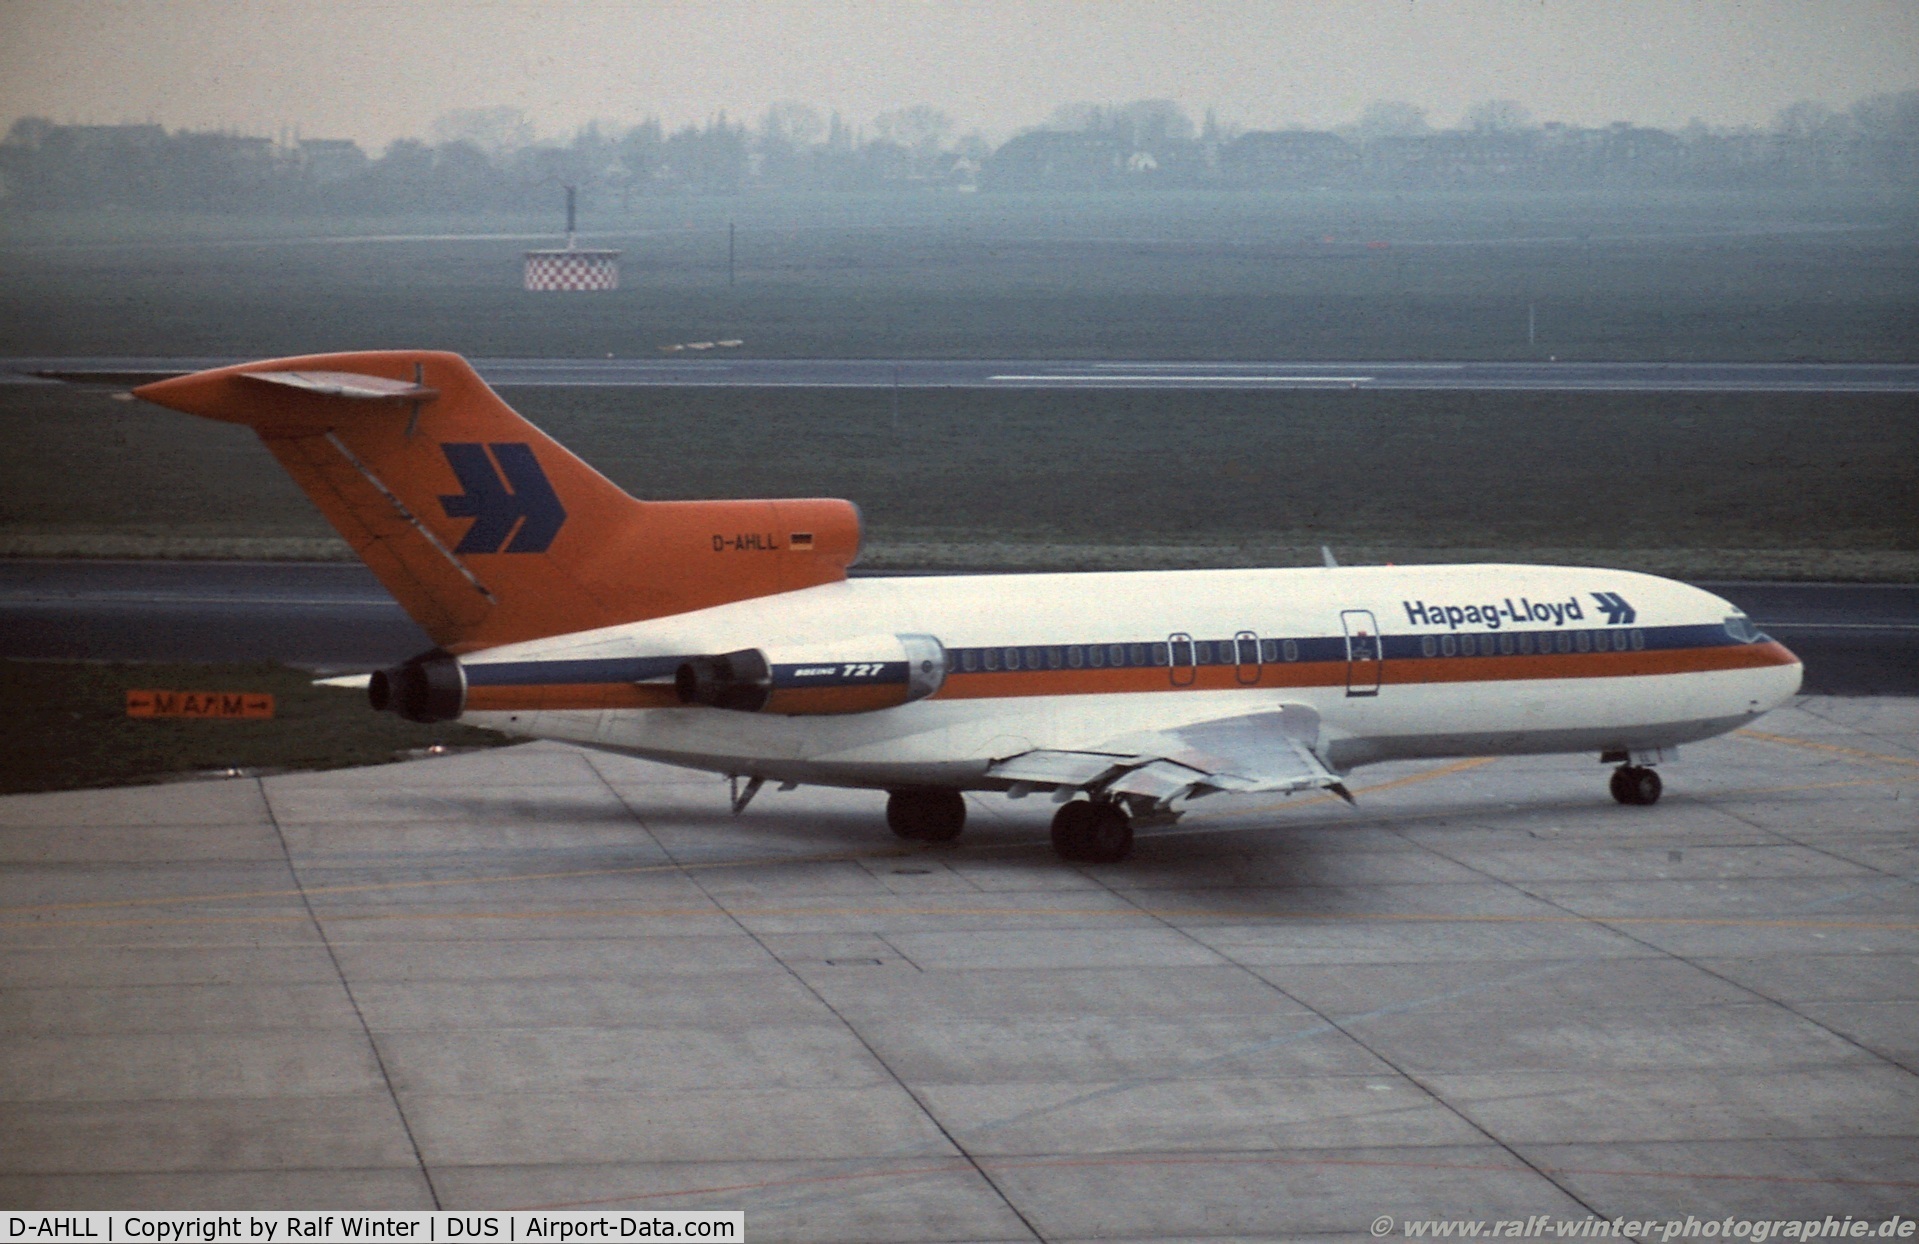 D-AHLL, 1965 Boeing 727-81 C/N 18823, Boeing 727-81 - Hapag Lloyd Flug - D-AHLL - 1979 - DUS, from a slide